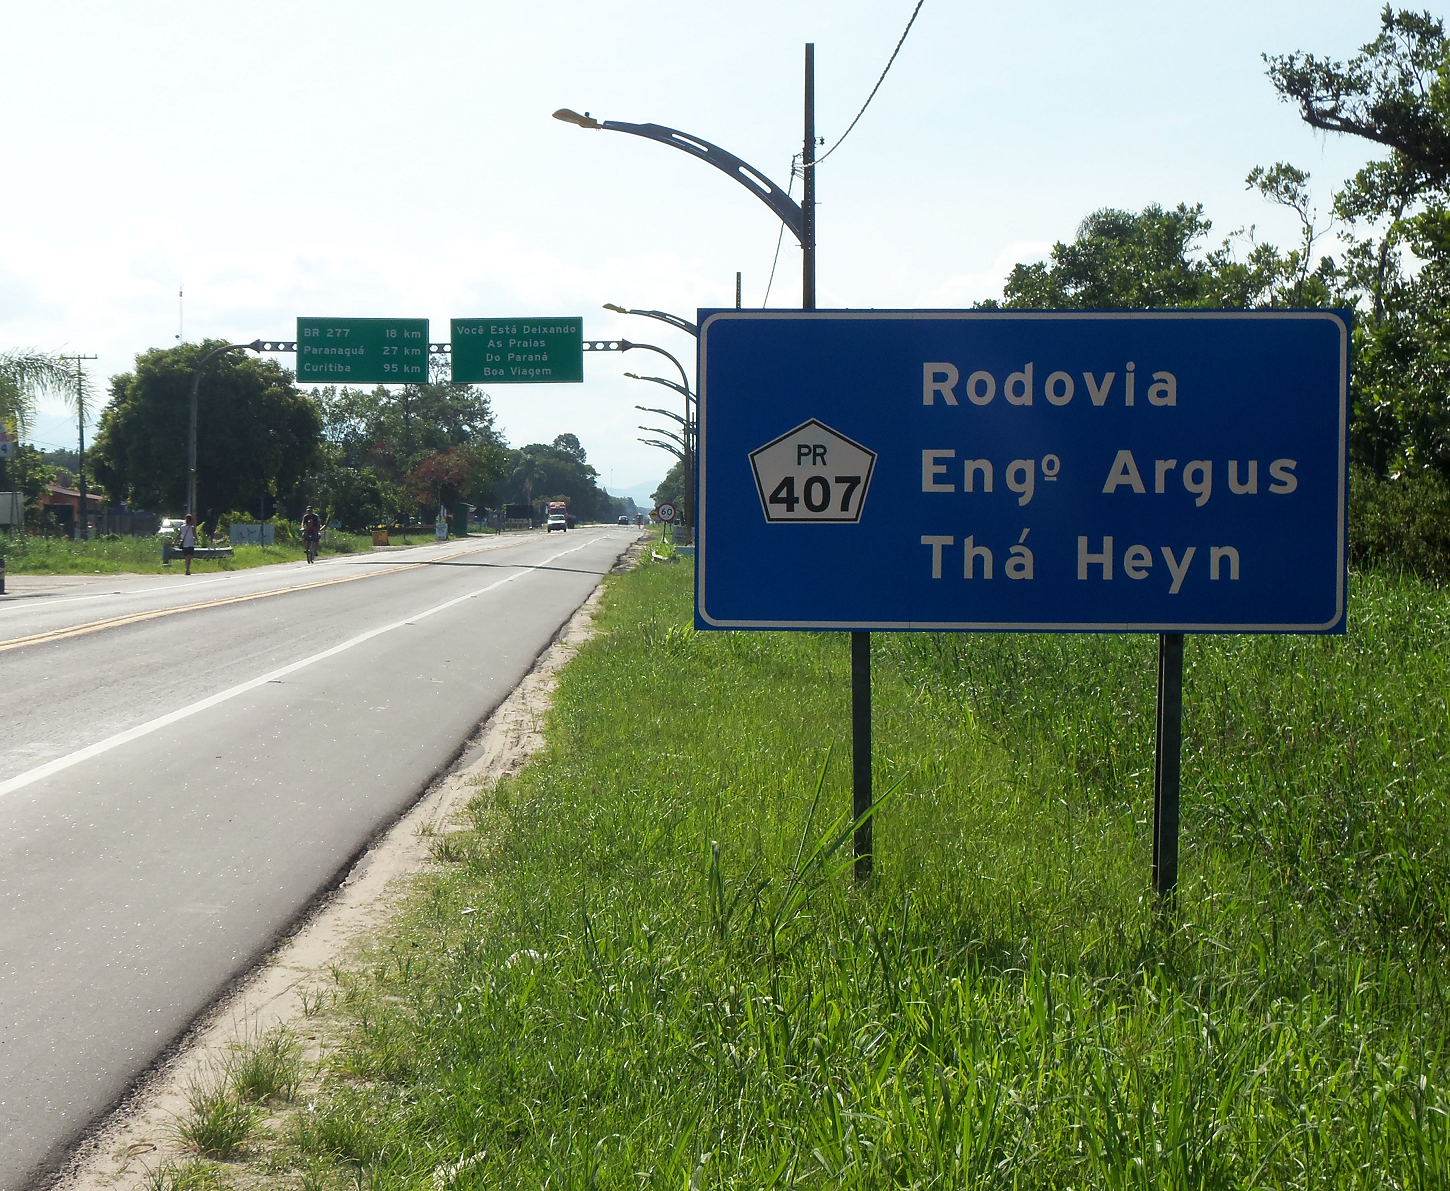 BR-277 (Brazil highway) - Wikipedia